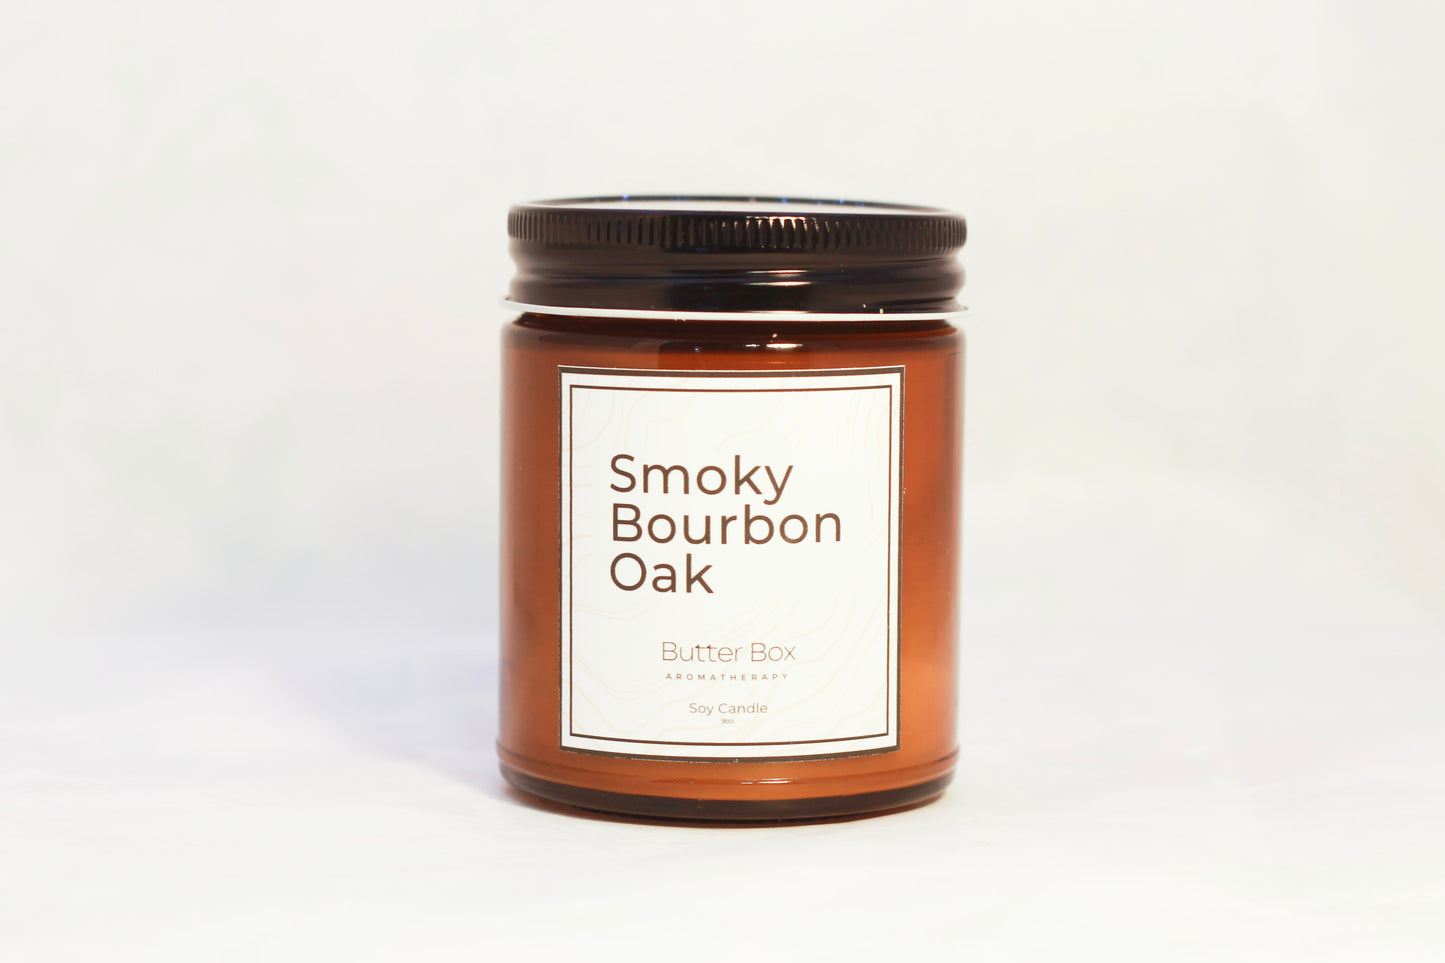 Smoky Bourbon Oak